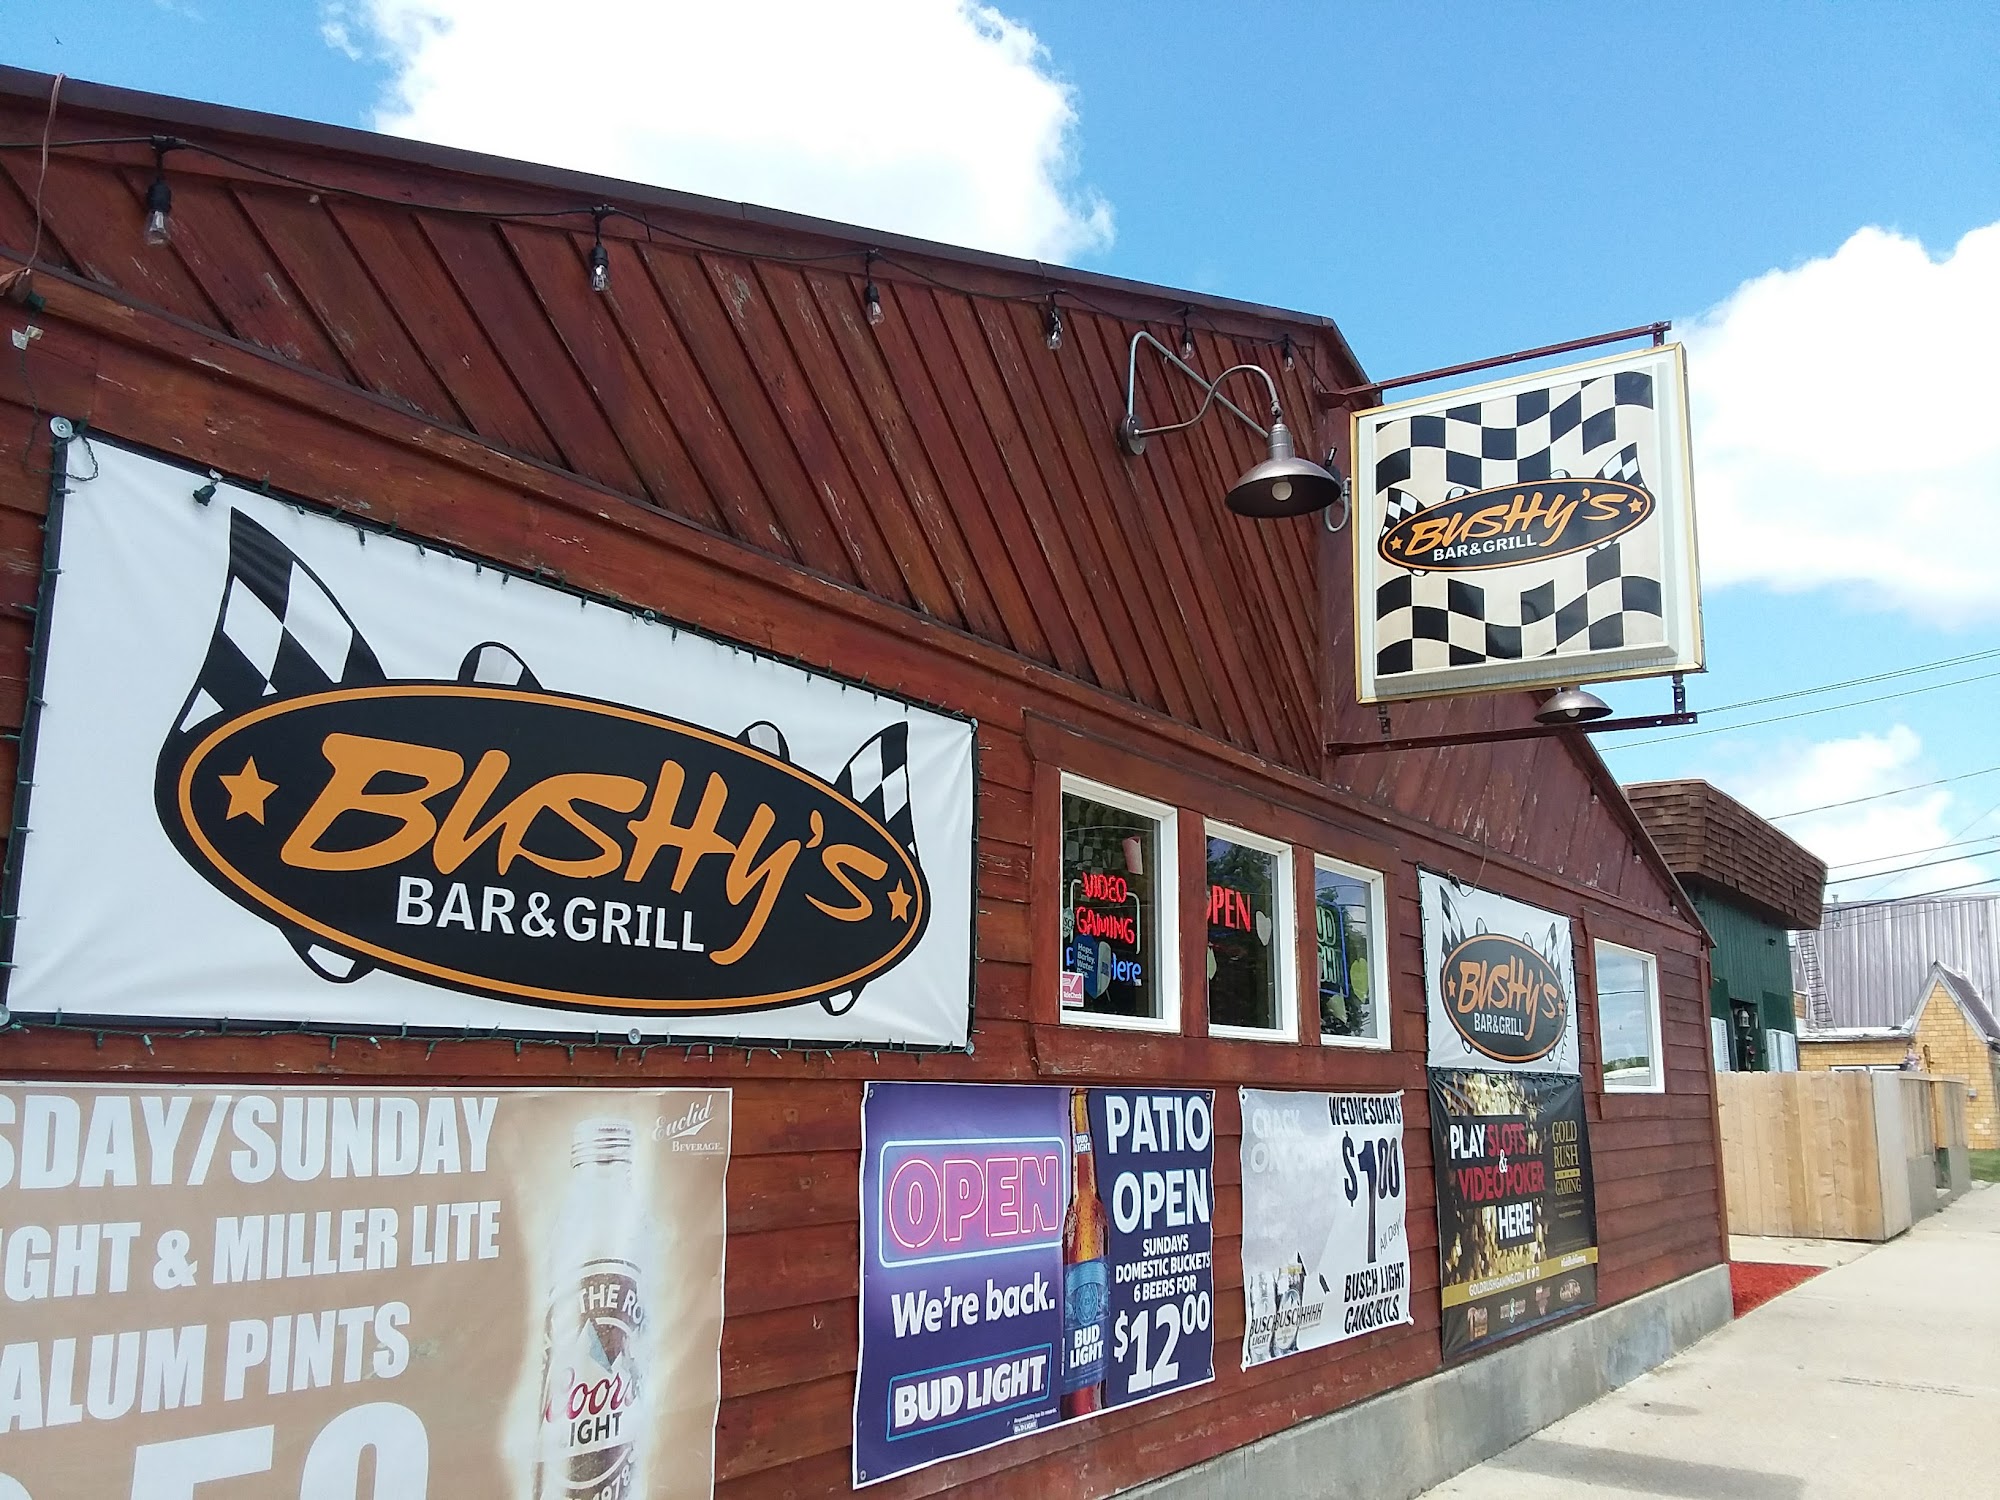 Bushy's Bar and Grill